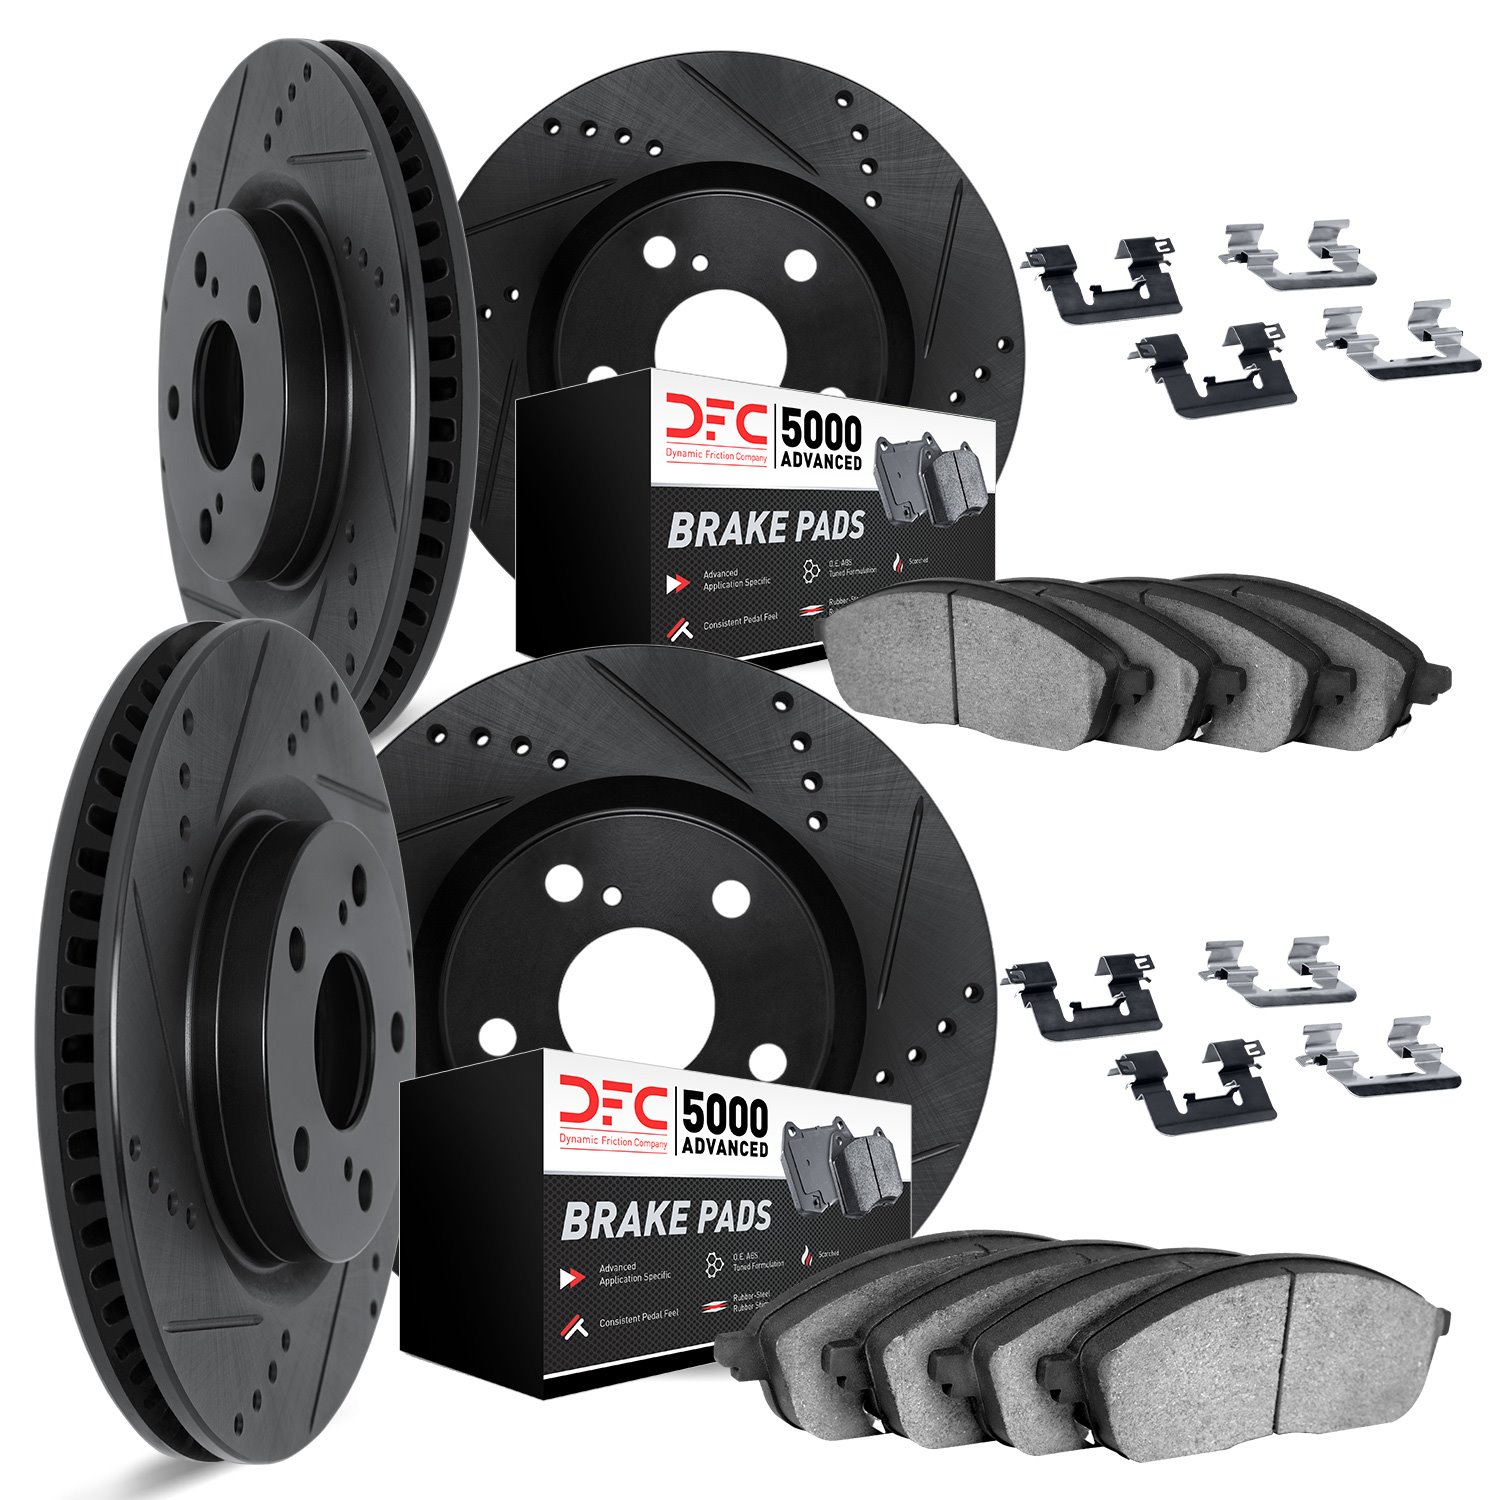 8514-20006 Drilled/Slotted Brake Rotors w/5000 Advanced Brake Pads Kit & Hardware [Black], 2013-2015 Jaguar, Position: Front and